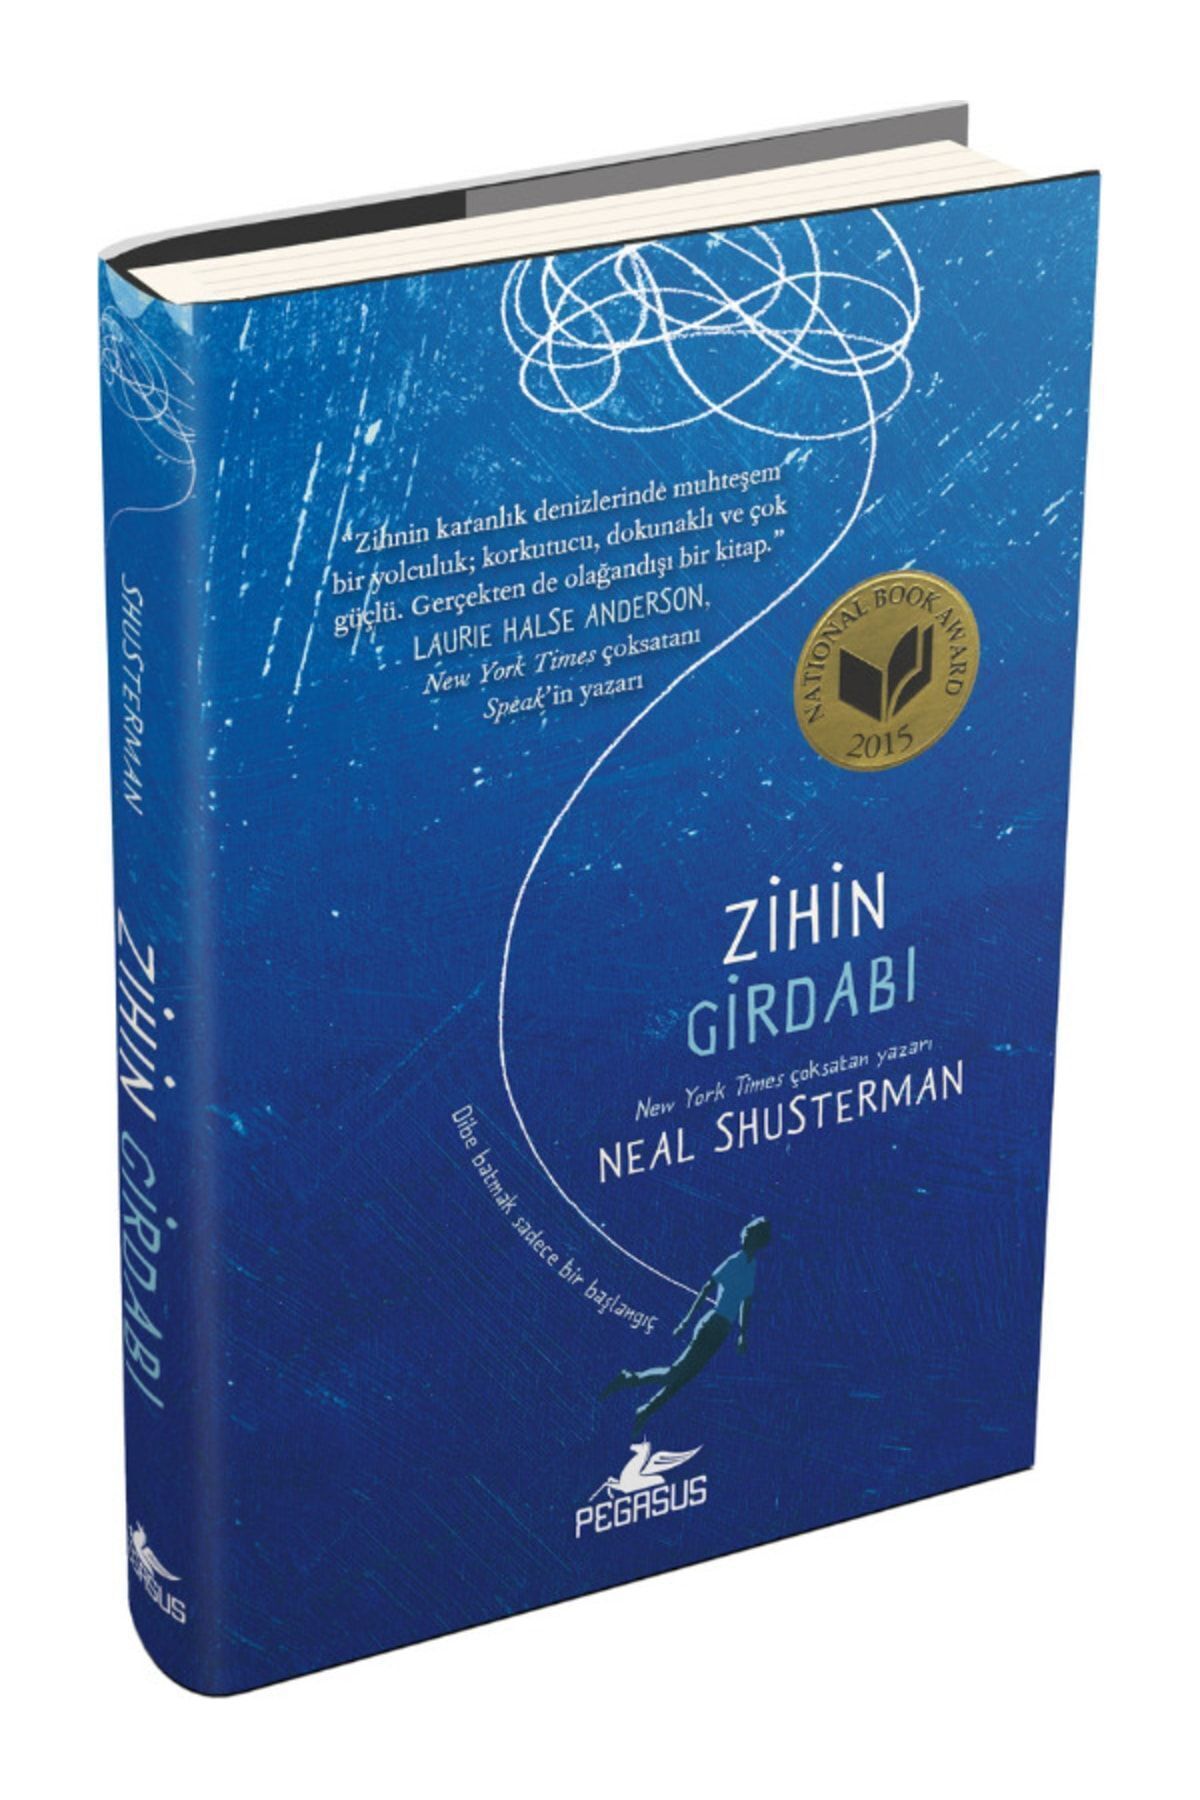 Pegasus Yayınları Zihin Girdabı (CİLTLİ) & Neal Shusterman